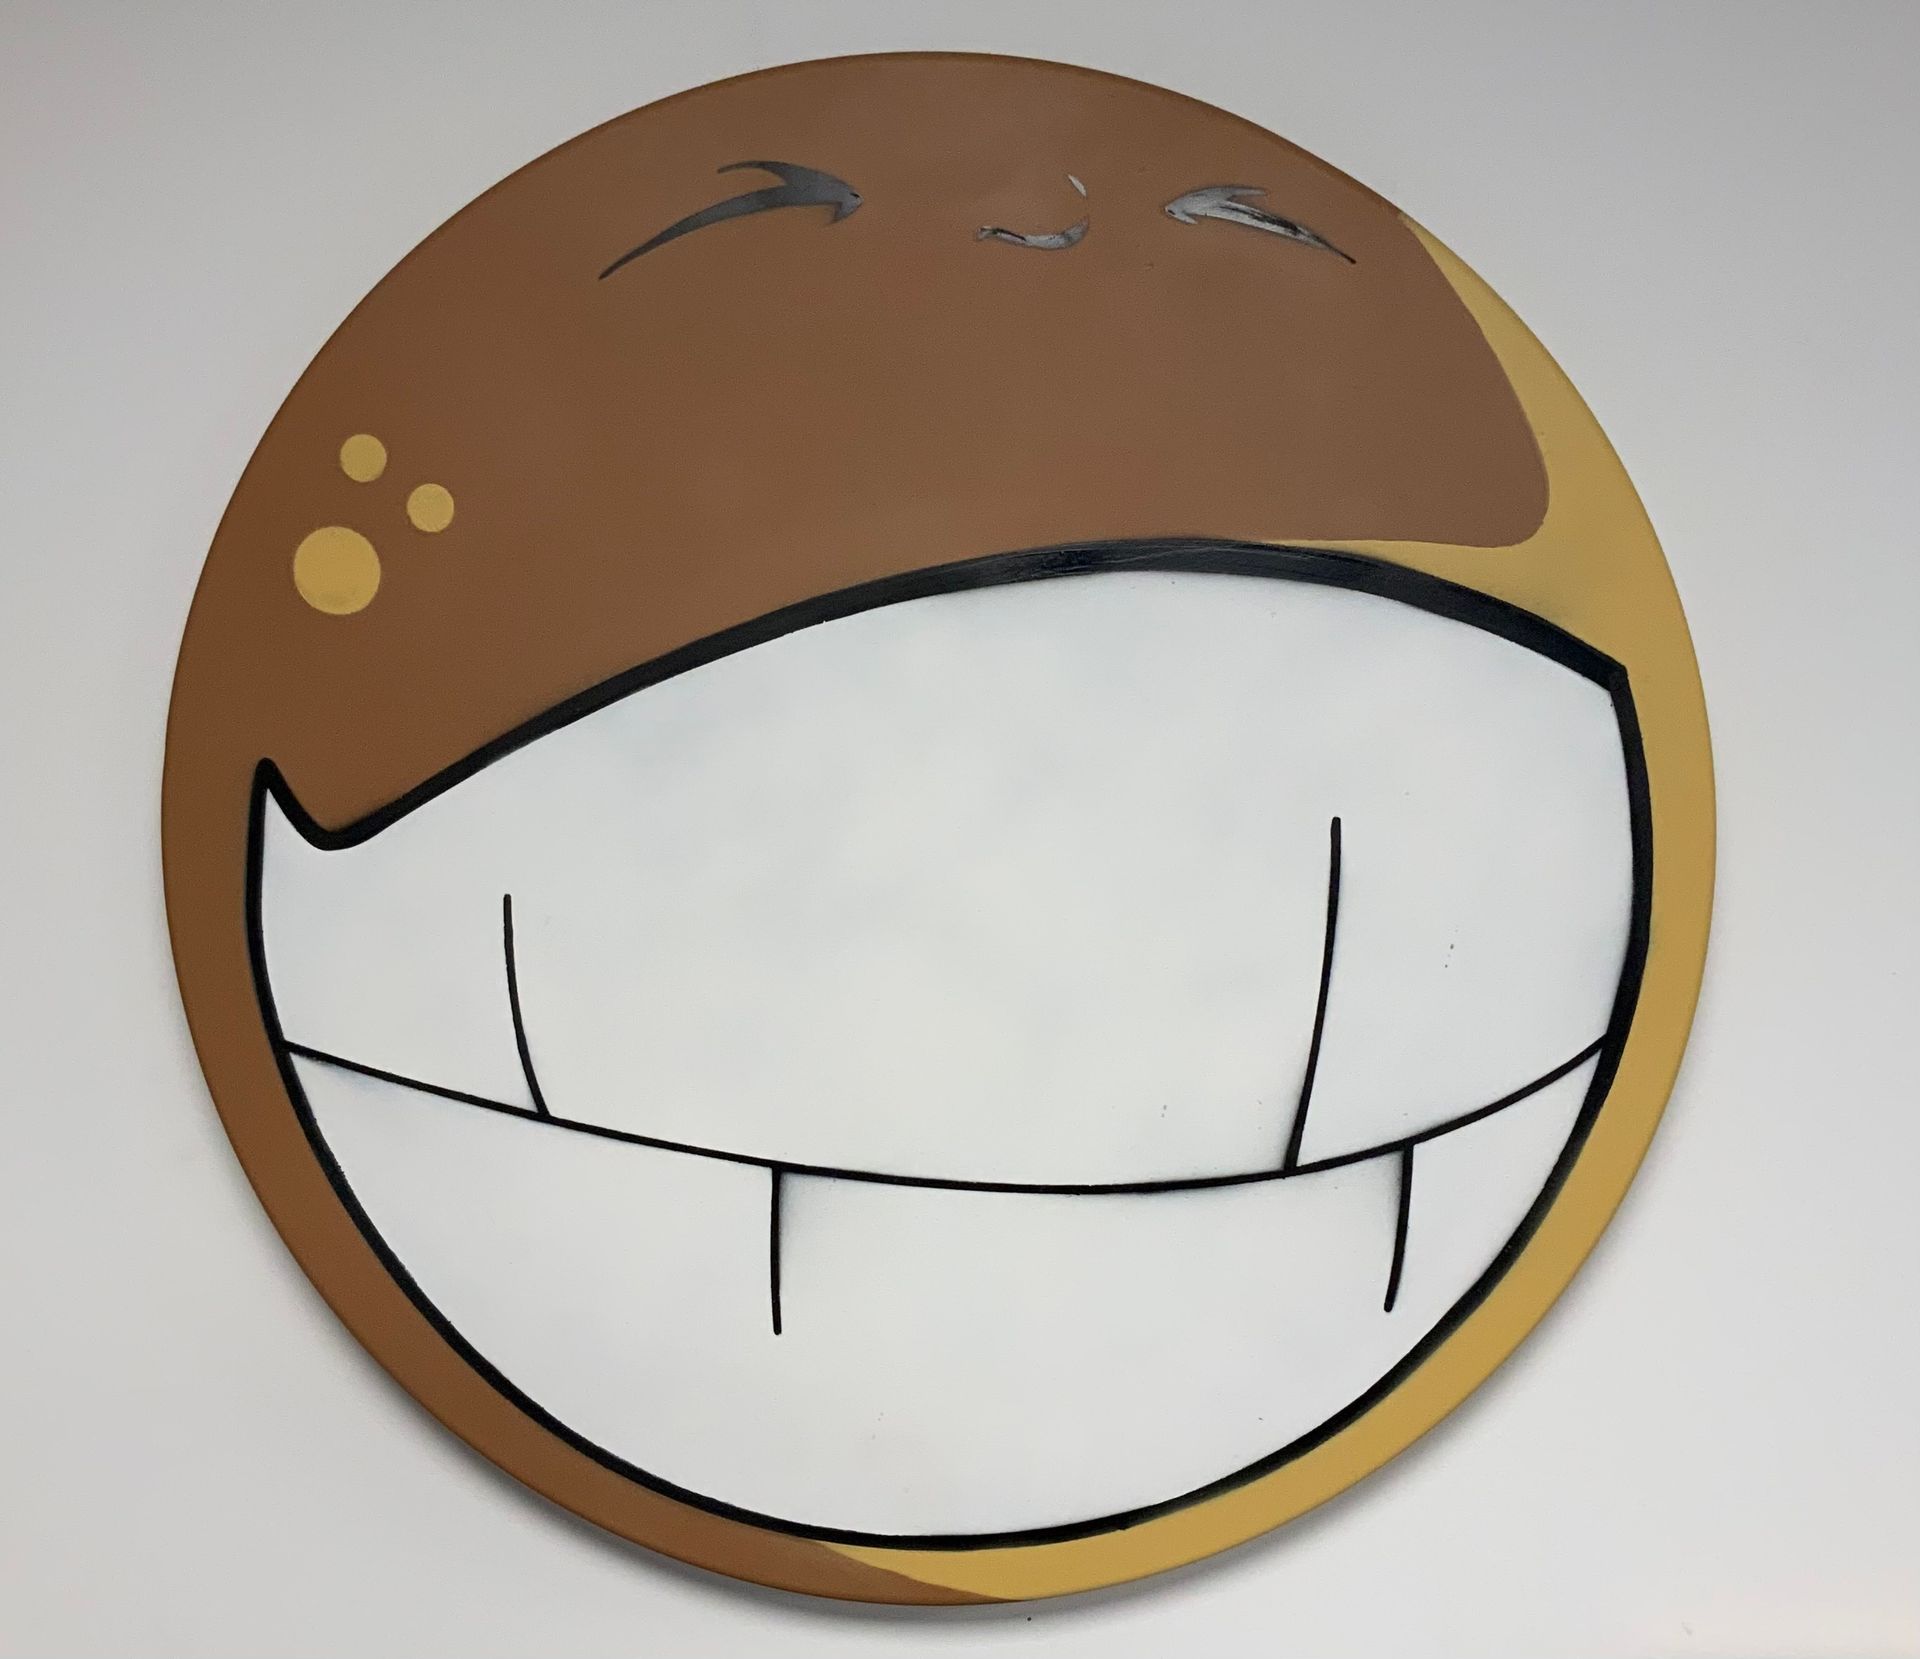 KWES SMILE - Mr GRATITUDE 
AEROSOL SUR METAL
59 cm de diamètre